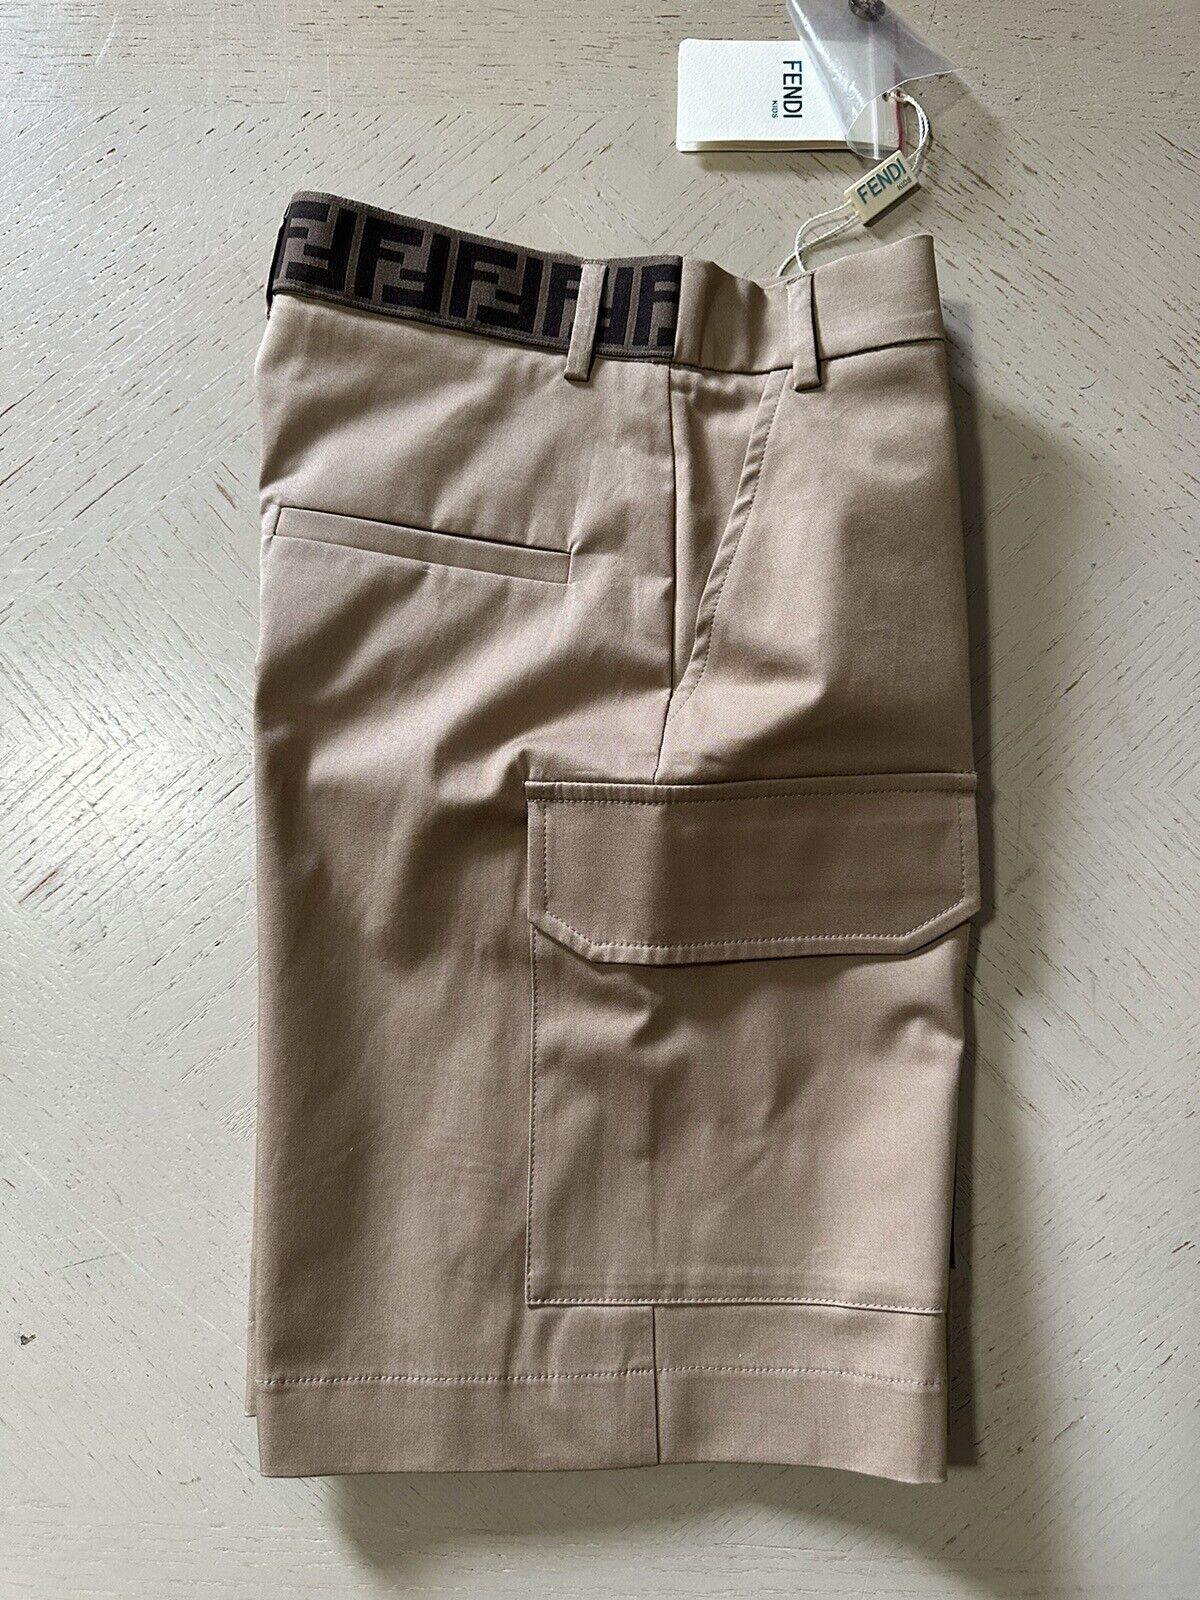 NWT $620 Fendi FF Logo Boys Short Pants Color Beige Size 10A